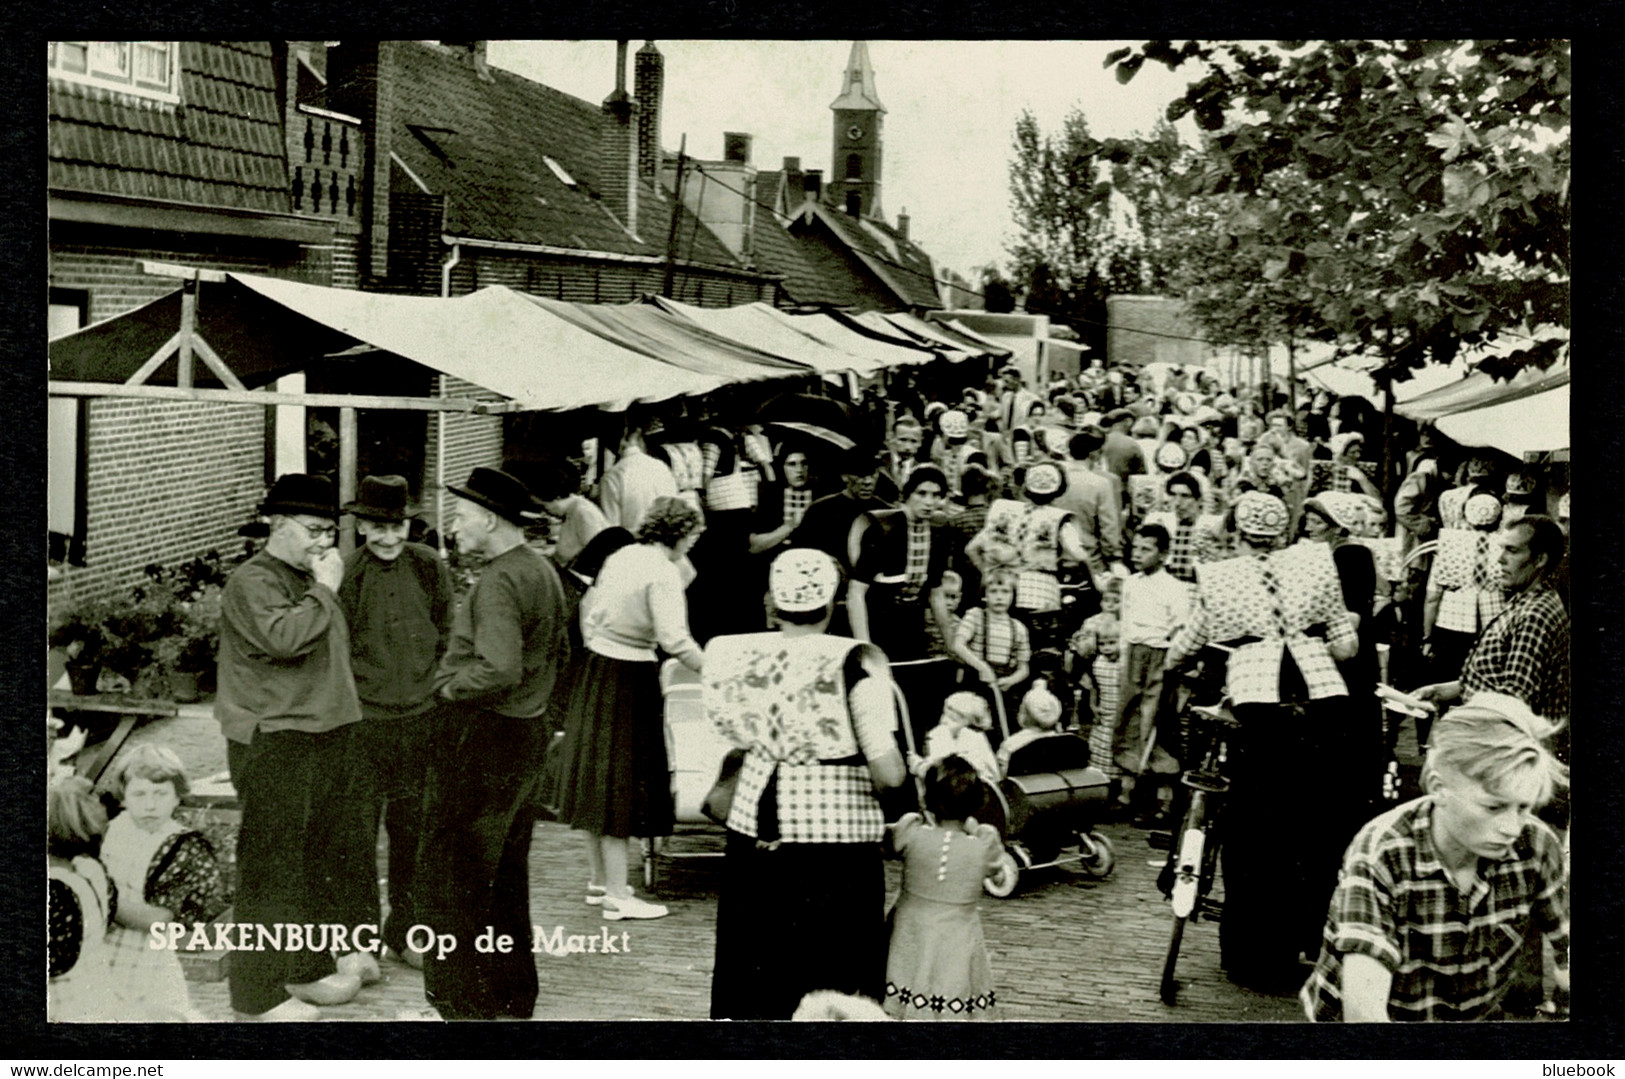 Ref 1591 - Real Photo Postcard - Spakenburg Utrecht - Op De Markt Street Market Netherlands - Spakenburg